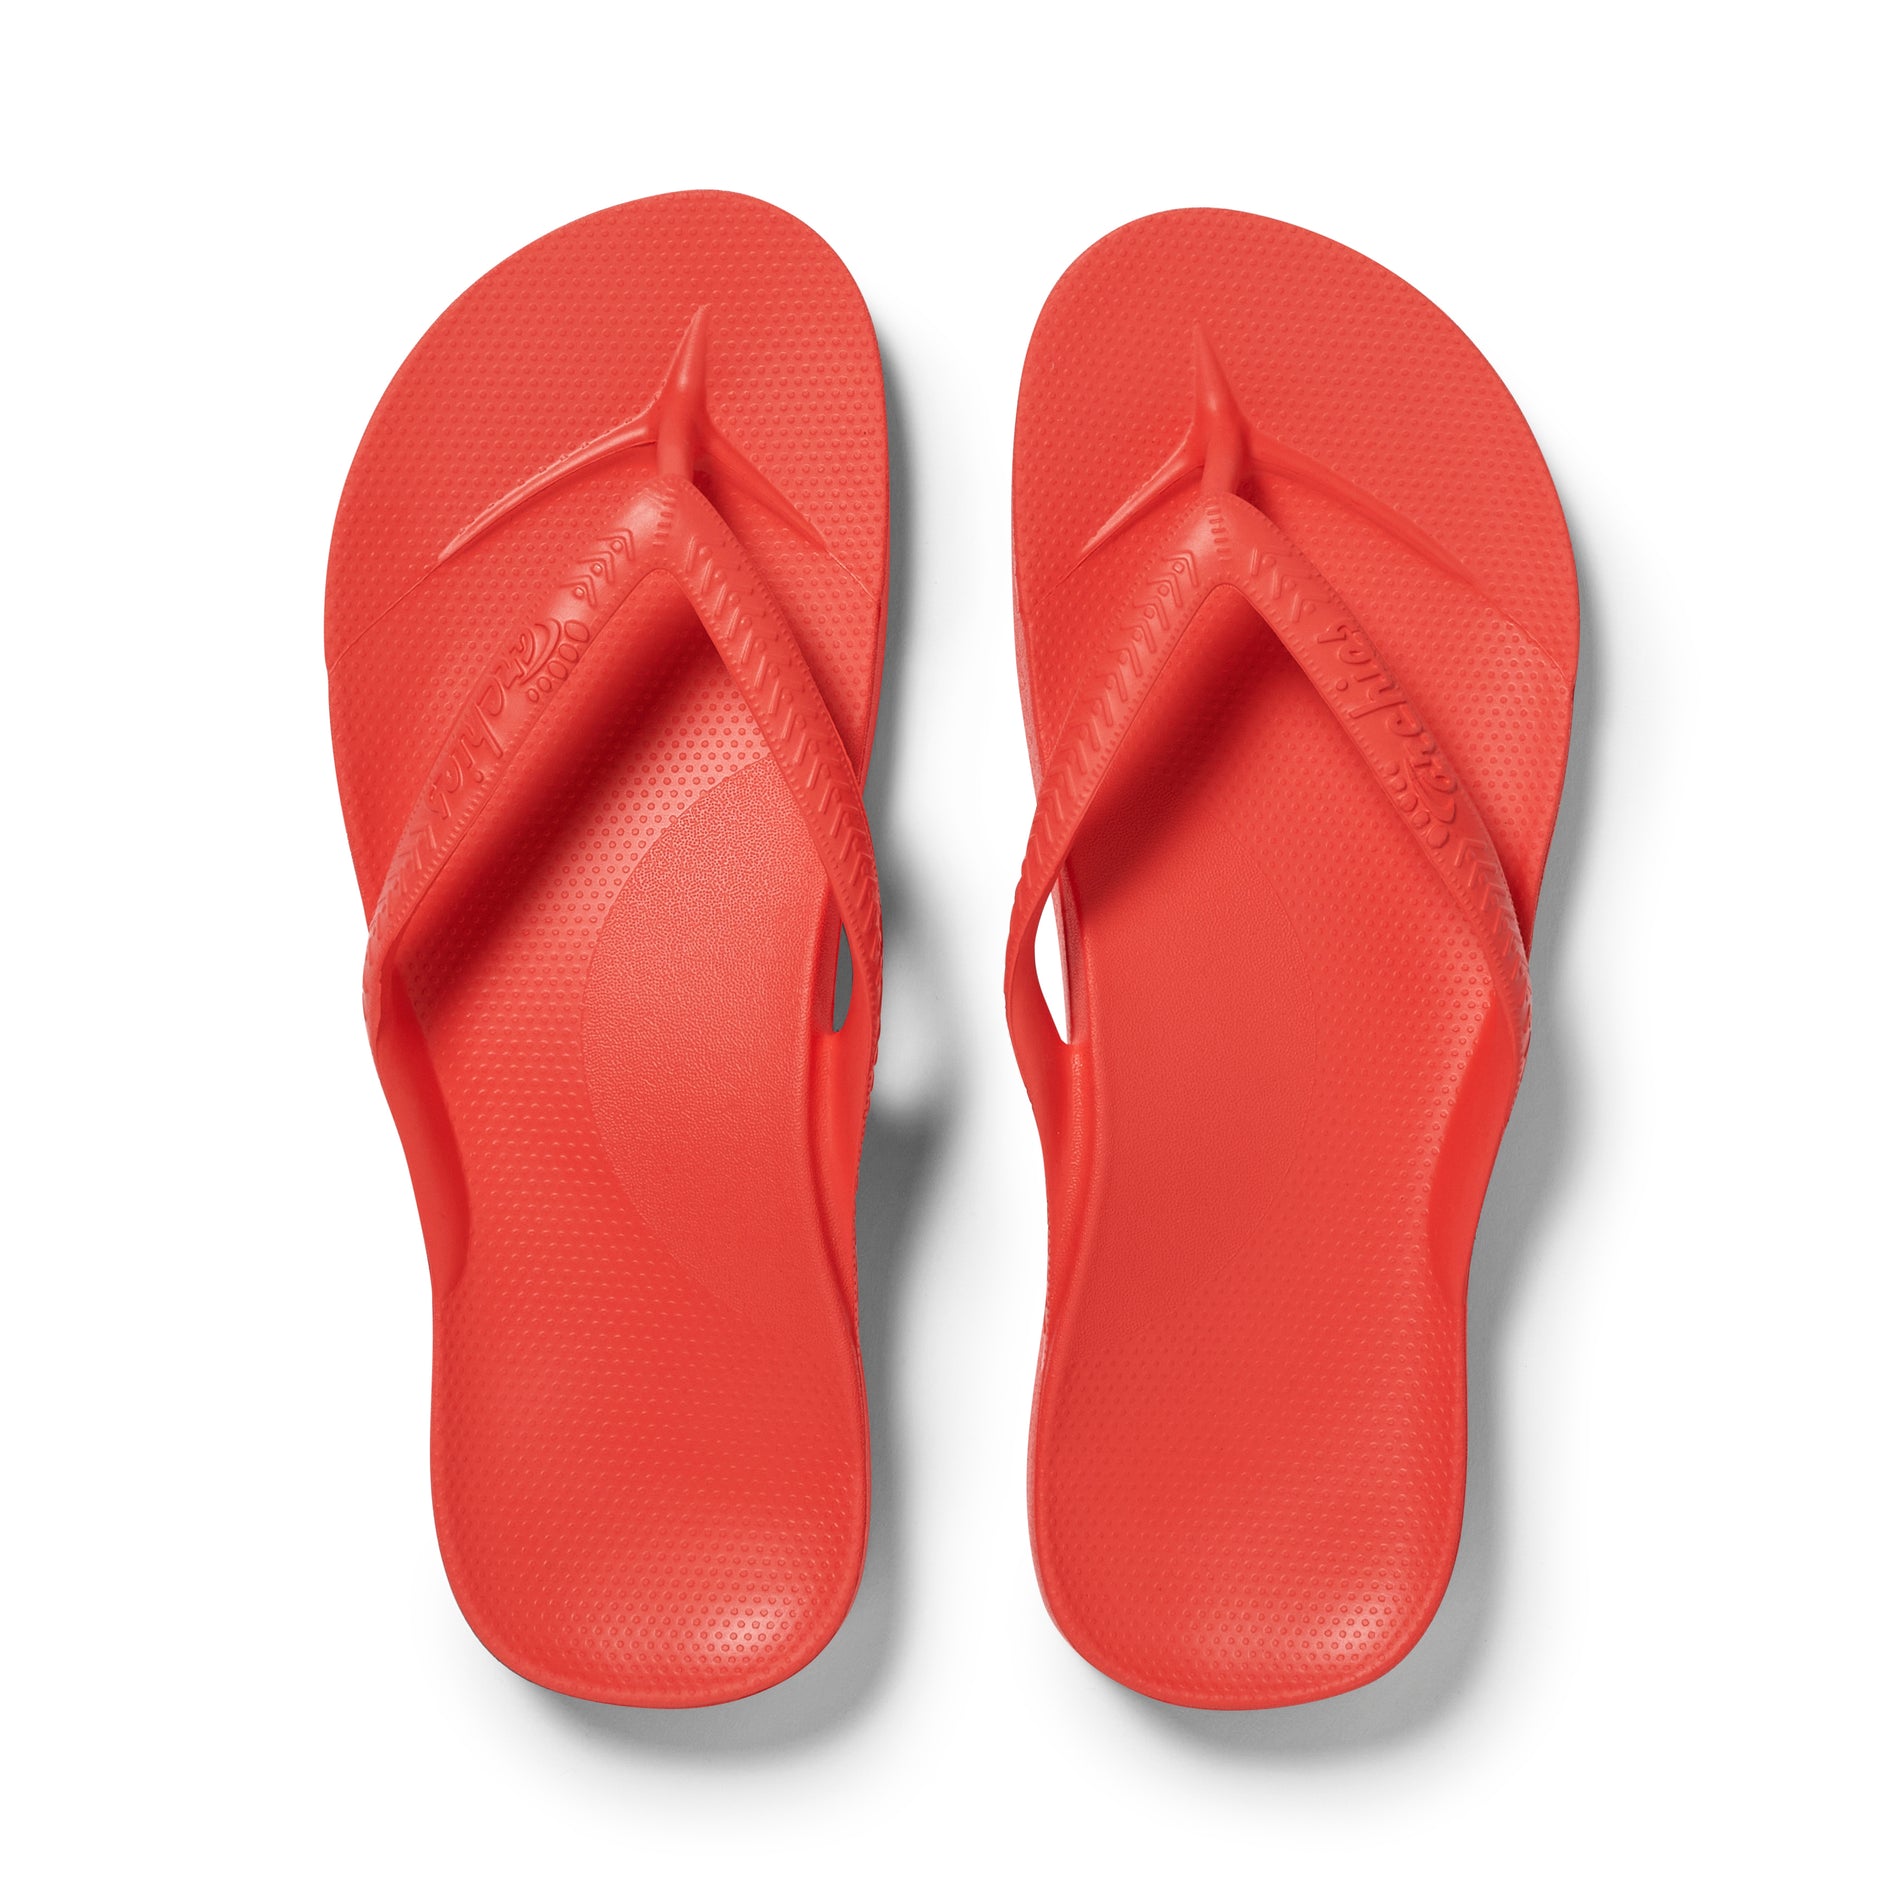 Archies Footwear - Arch Support Flip Flops & Footwear – Archies ...